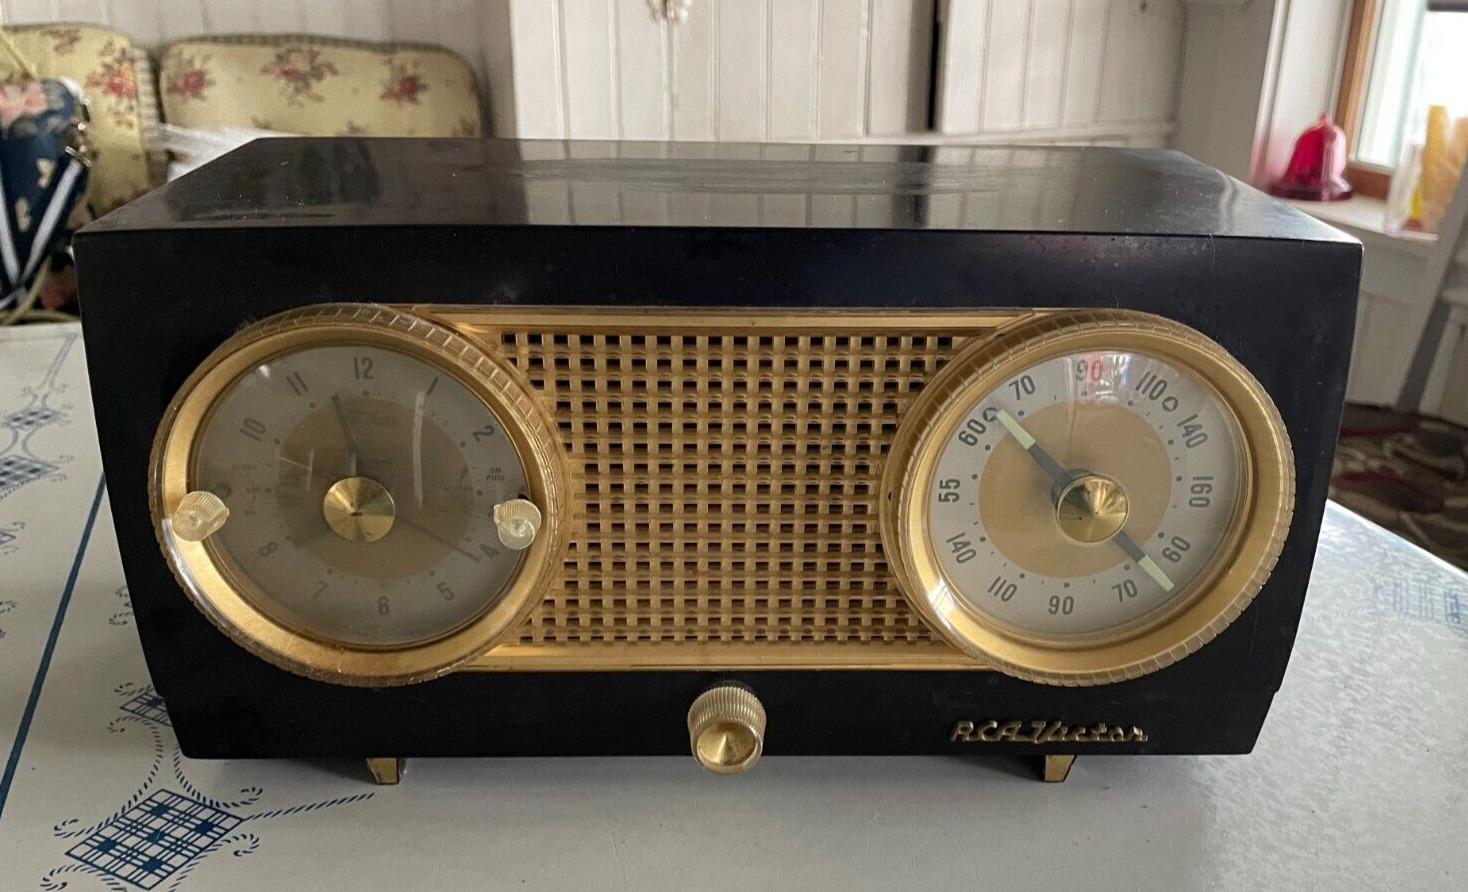 Vintage 1954 RCA Victor Model 4-C-541 Tube Clock Radio.